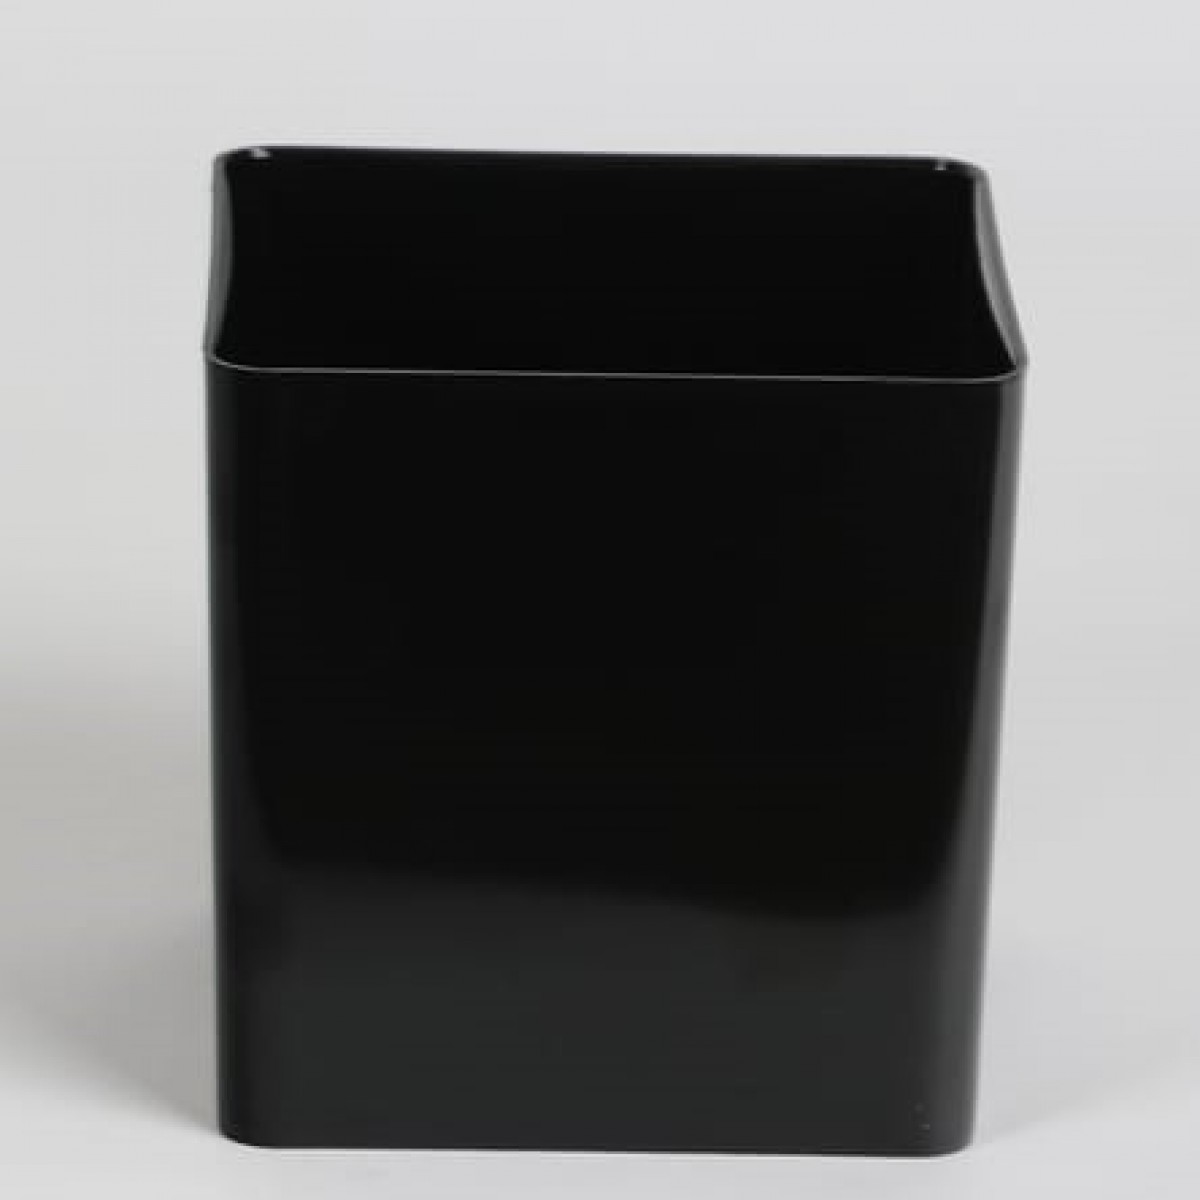 5112 Cube Black 13x13x13cm Acrylic Vase - 1 No